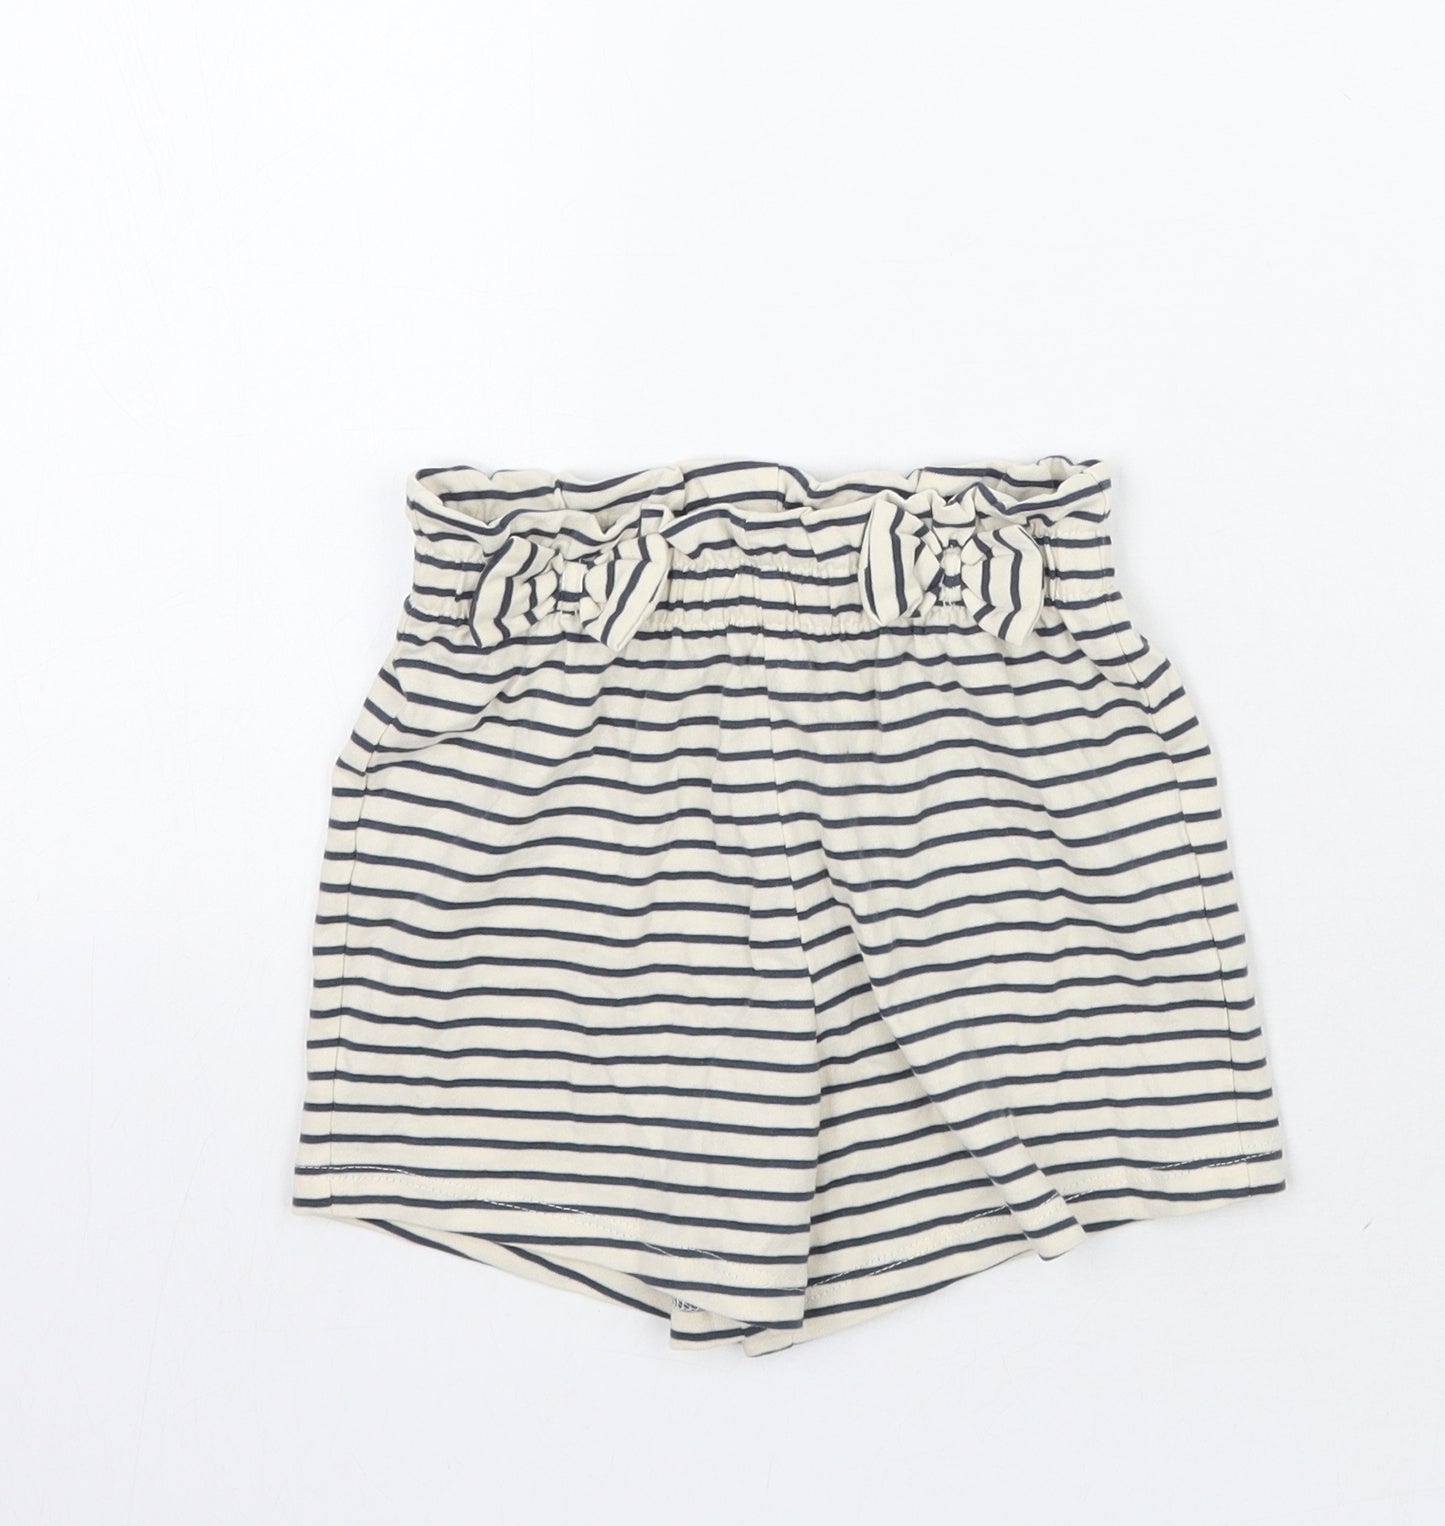 George Girls Ivory Striped  Sweat Shorts Size 4-5 Years